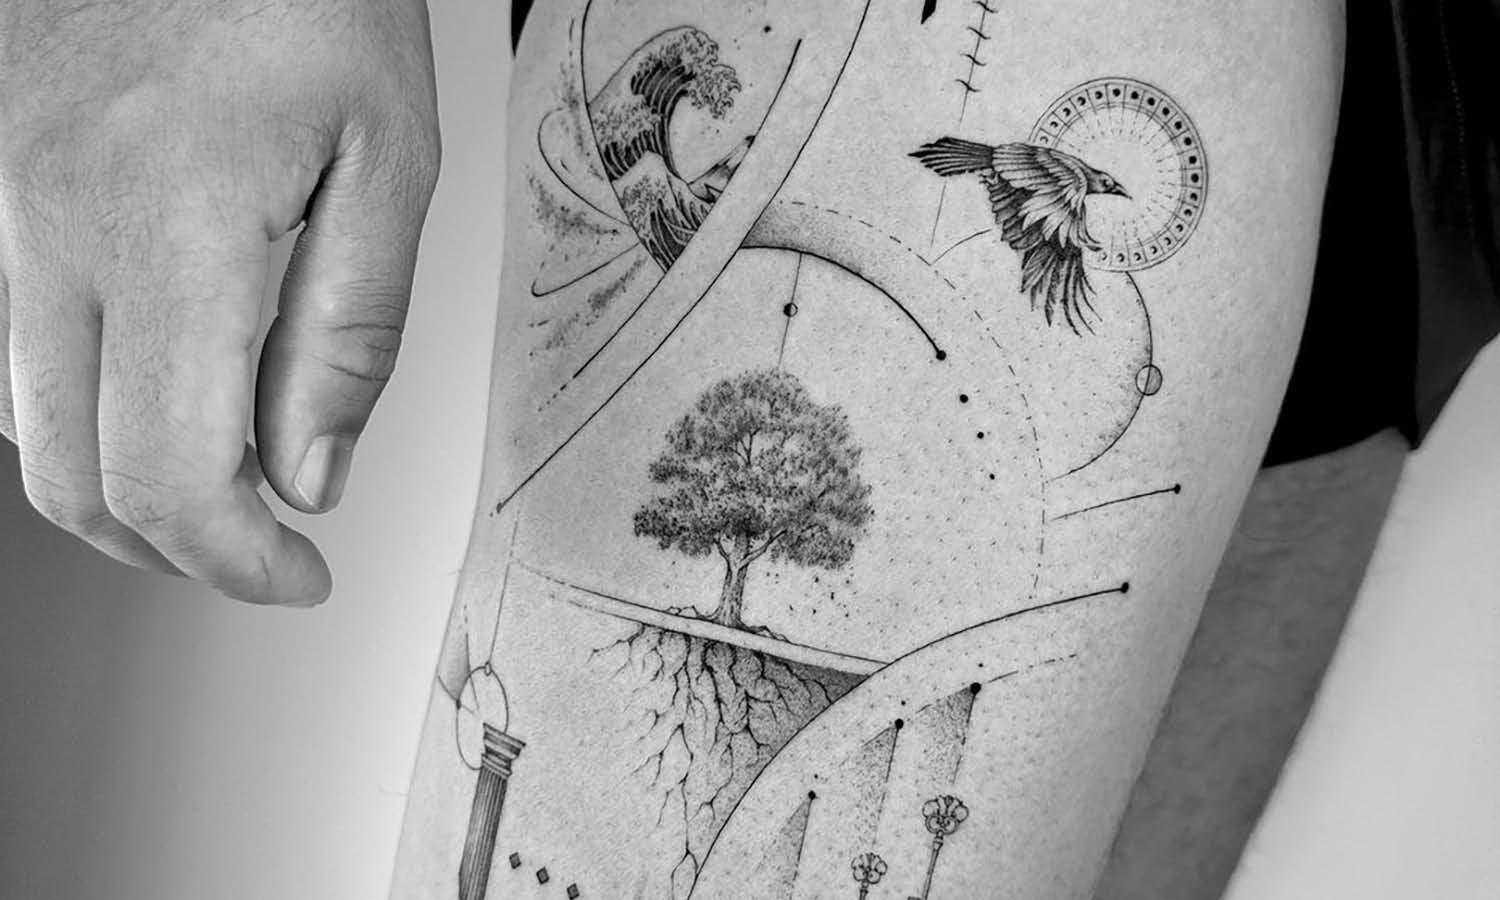 tattoos | Sleeve tattoos, Tattoos for women, Leg tattoos women